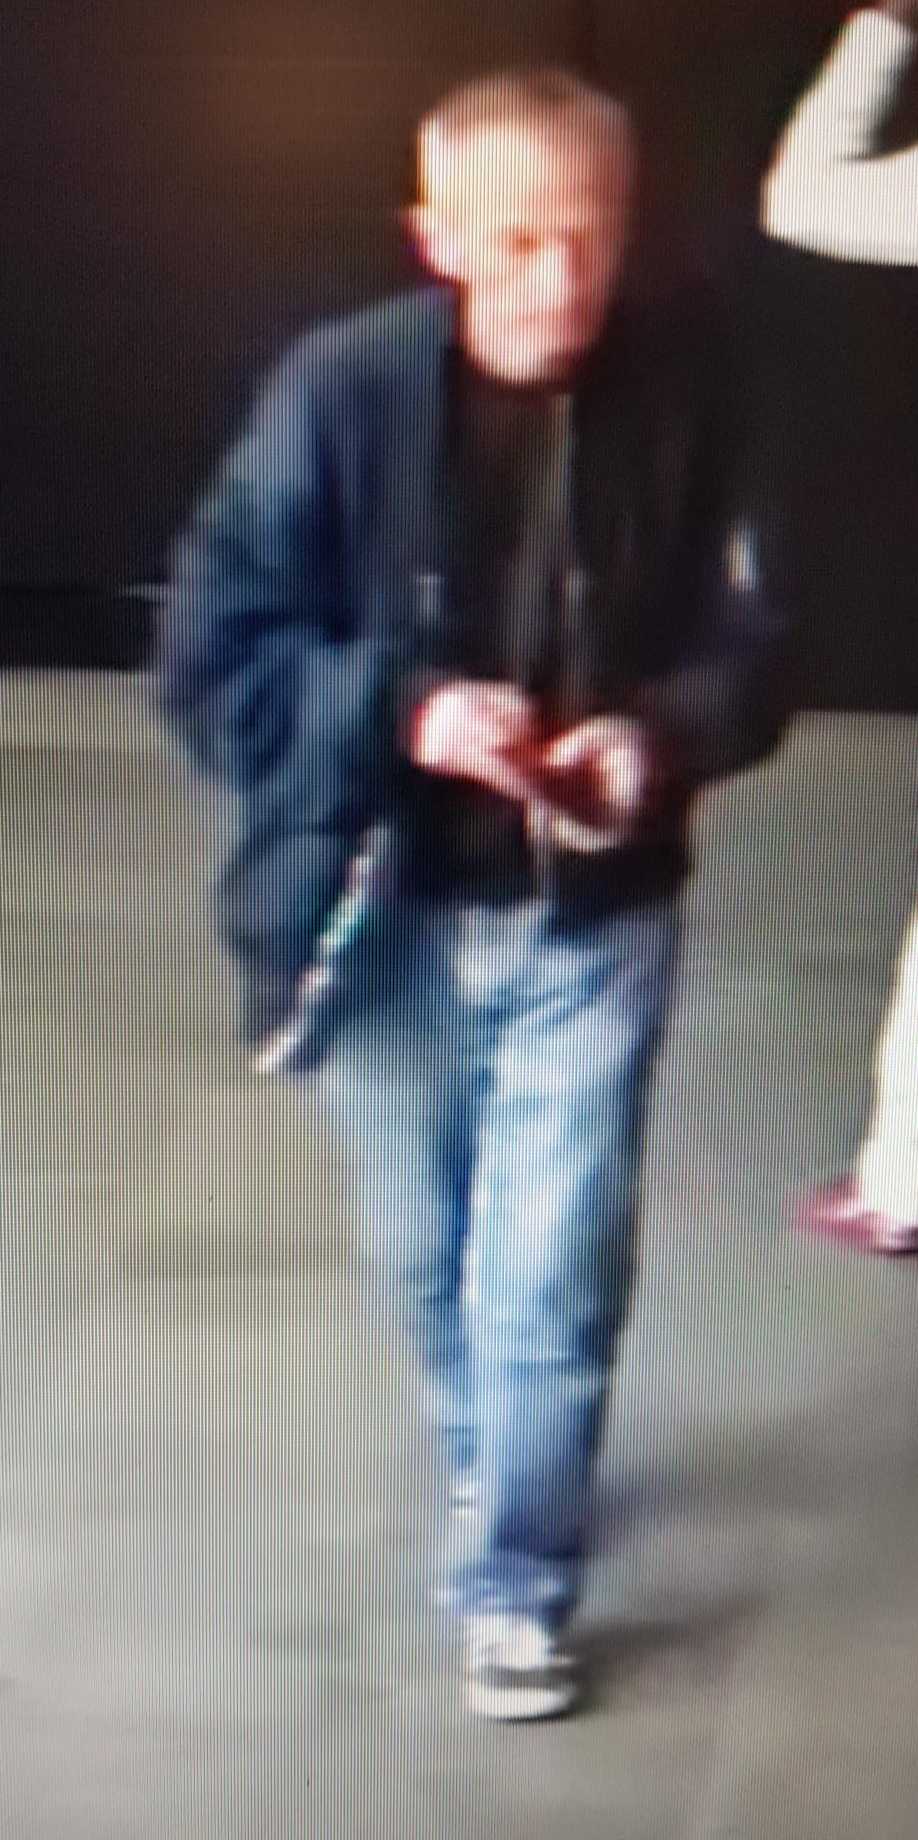 Mark Barrott on CCTV at Leeds train station on Sunday